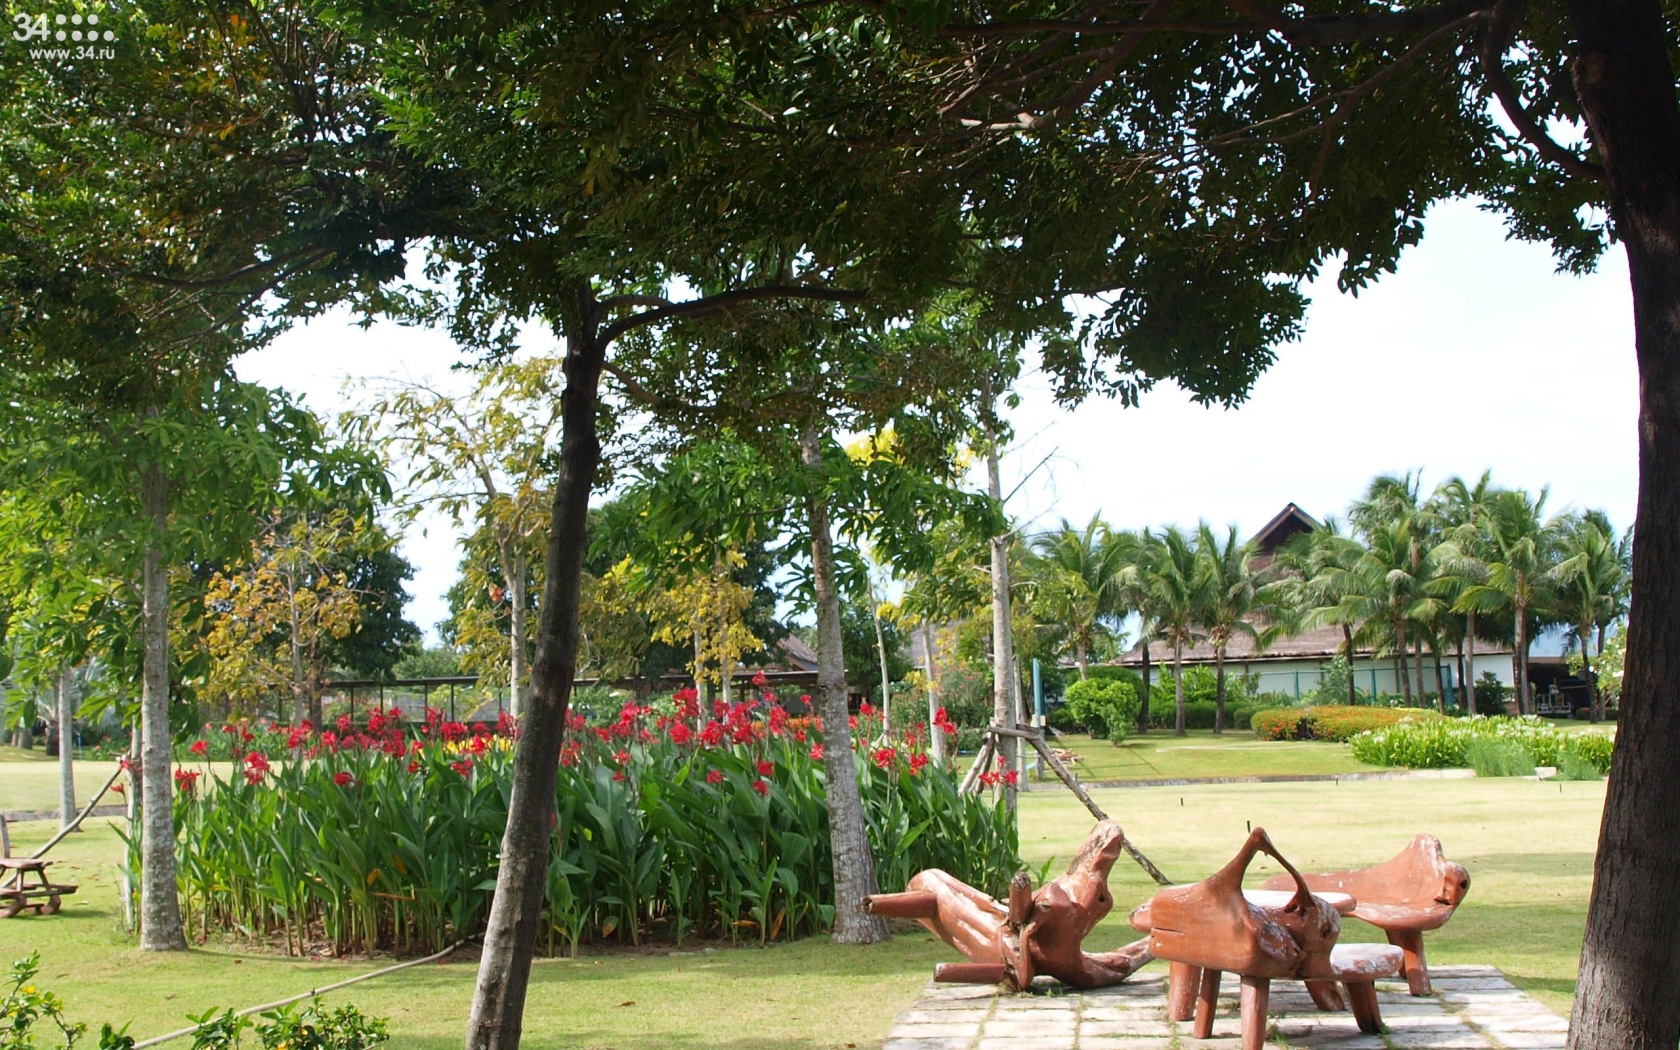 Gardens of paradise on the island of Koh Samui, Thailand